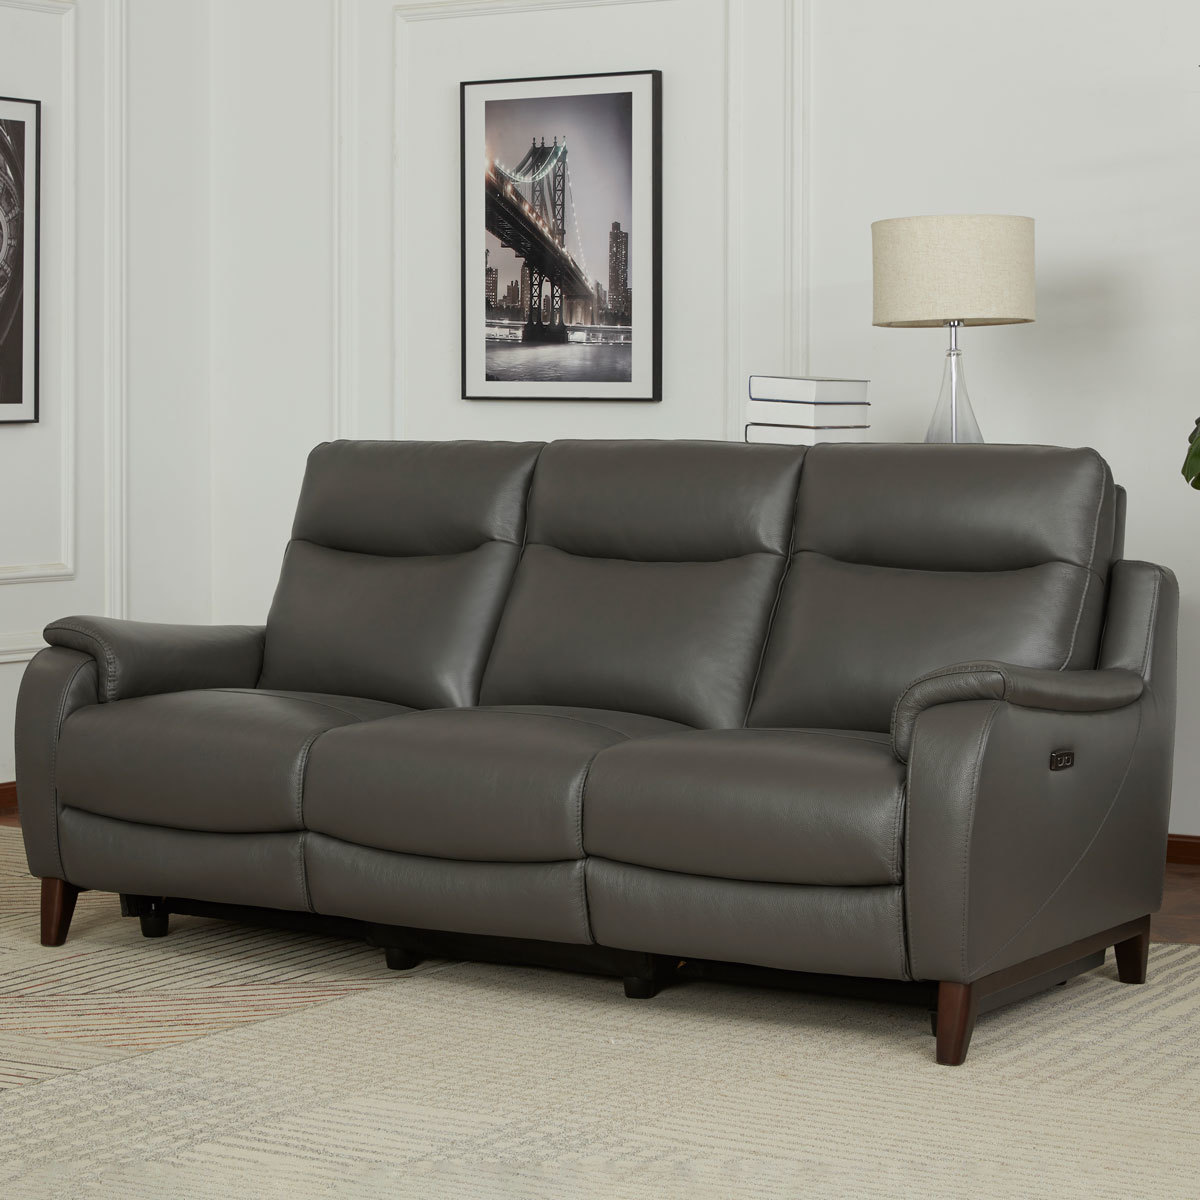 Leather Power Reclining Sofa, Best Reclining Leather Sofa Sets Uk